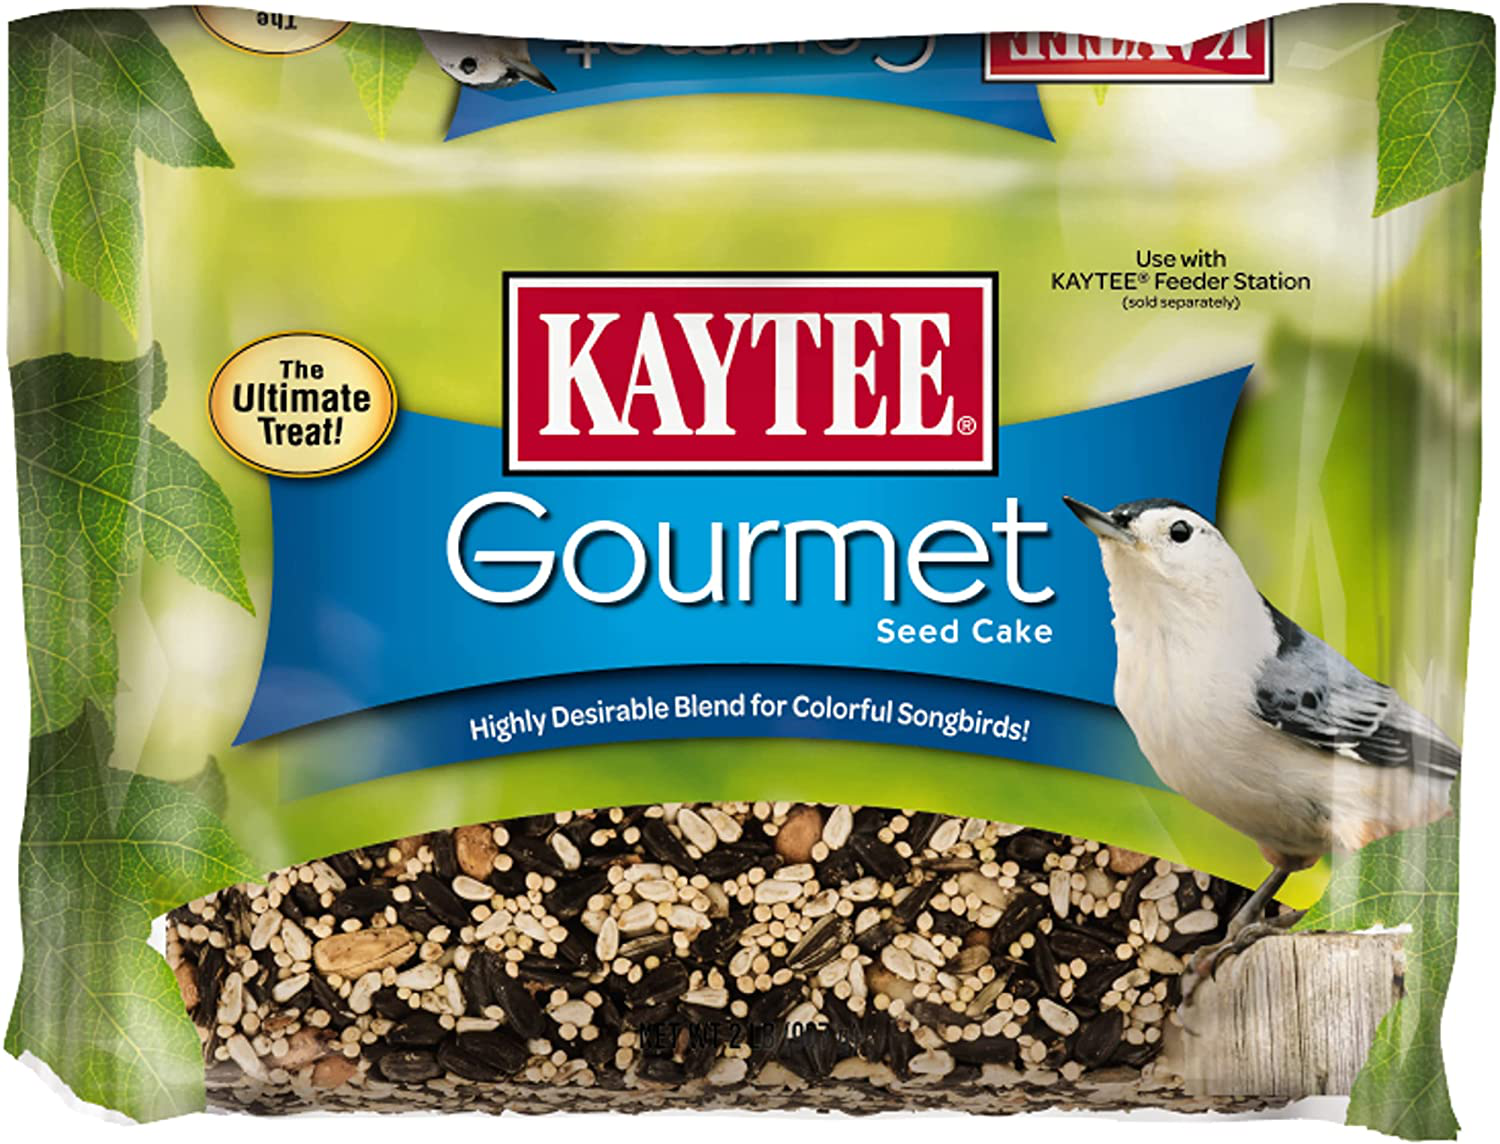 Kaytee 100063947 Gourmet Seed Cake, 2 Lb, None